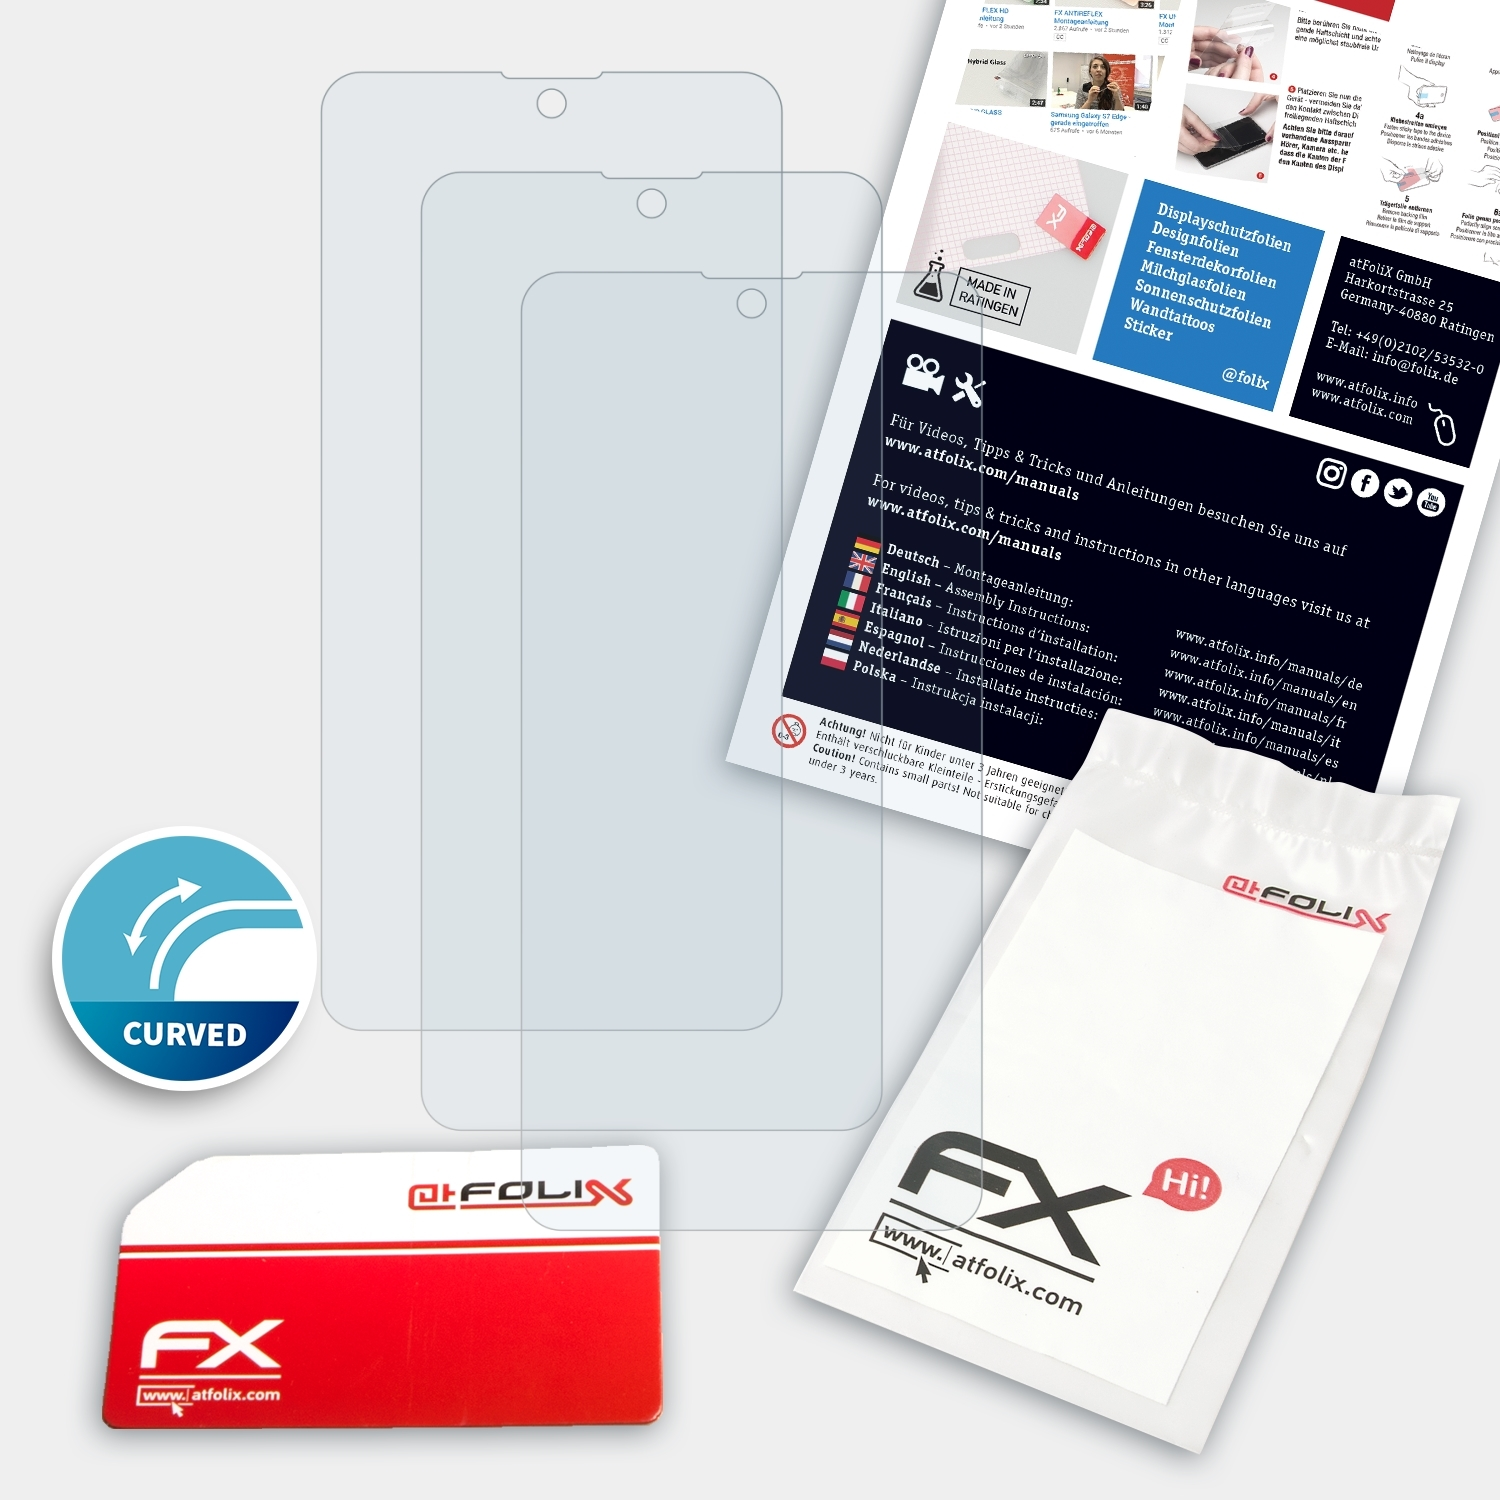 Ace Xperia FX-ActiFleX Sony (SO-41B)) 3x ATFOLIX II Displayschutz(für